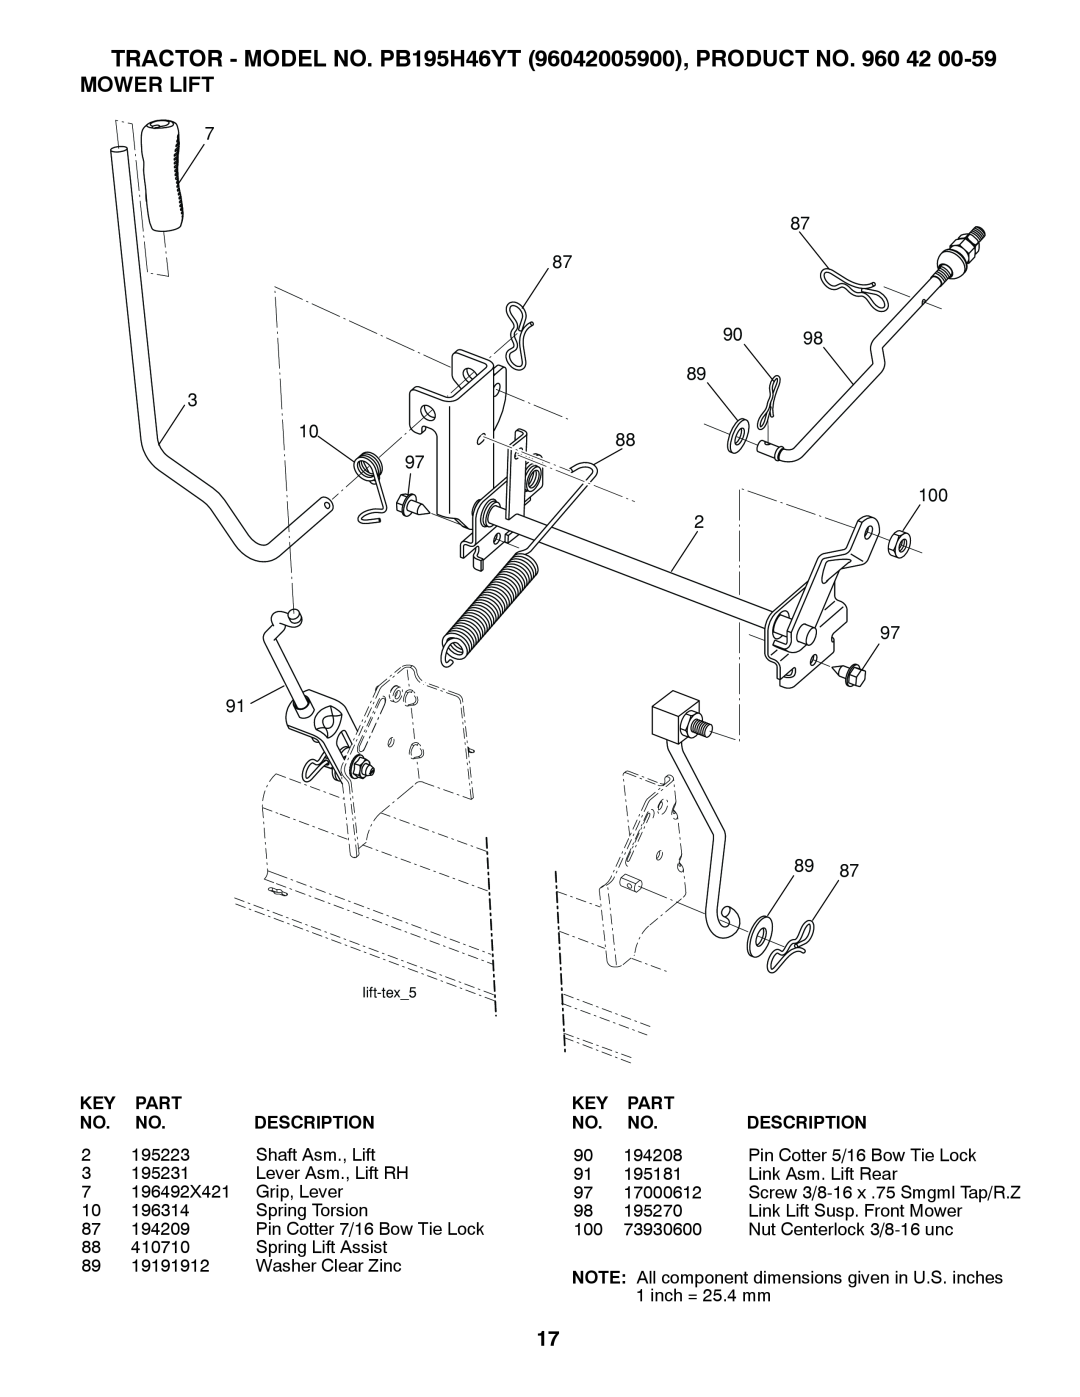 Poulan manual Mower Lift, 9098, TRACTOR - MODEL NO. PB195H46YT 96042005900, PRODUCT NO. 960 42, Part, Description 